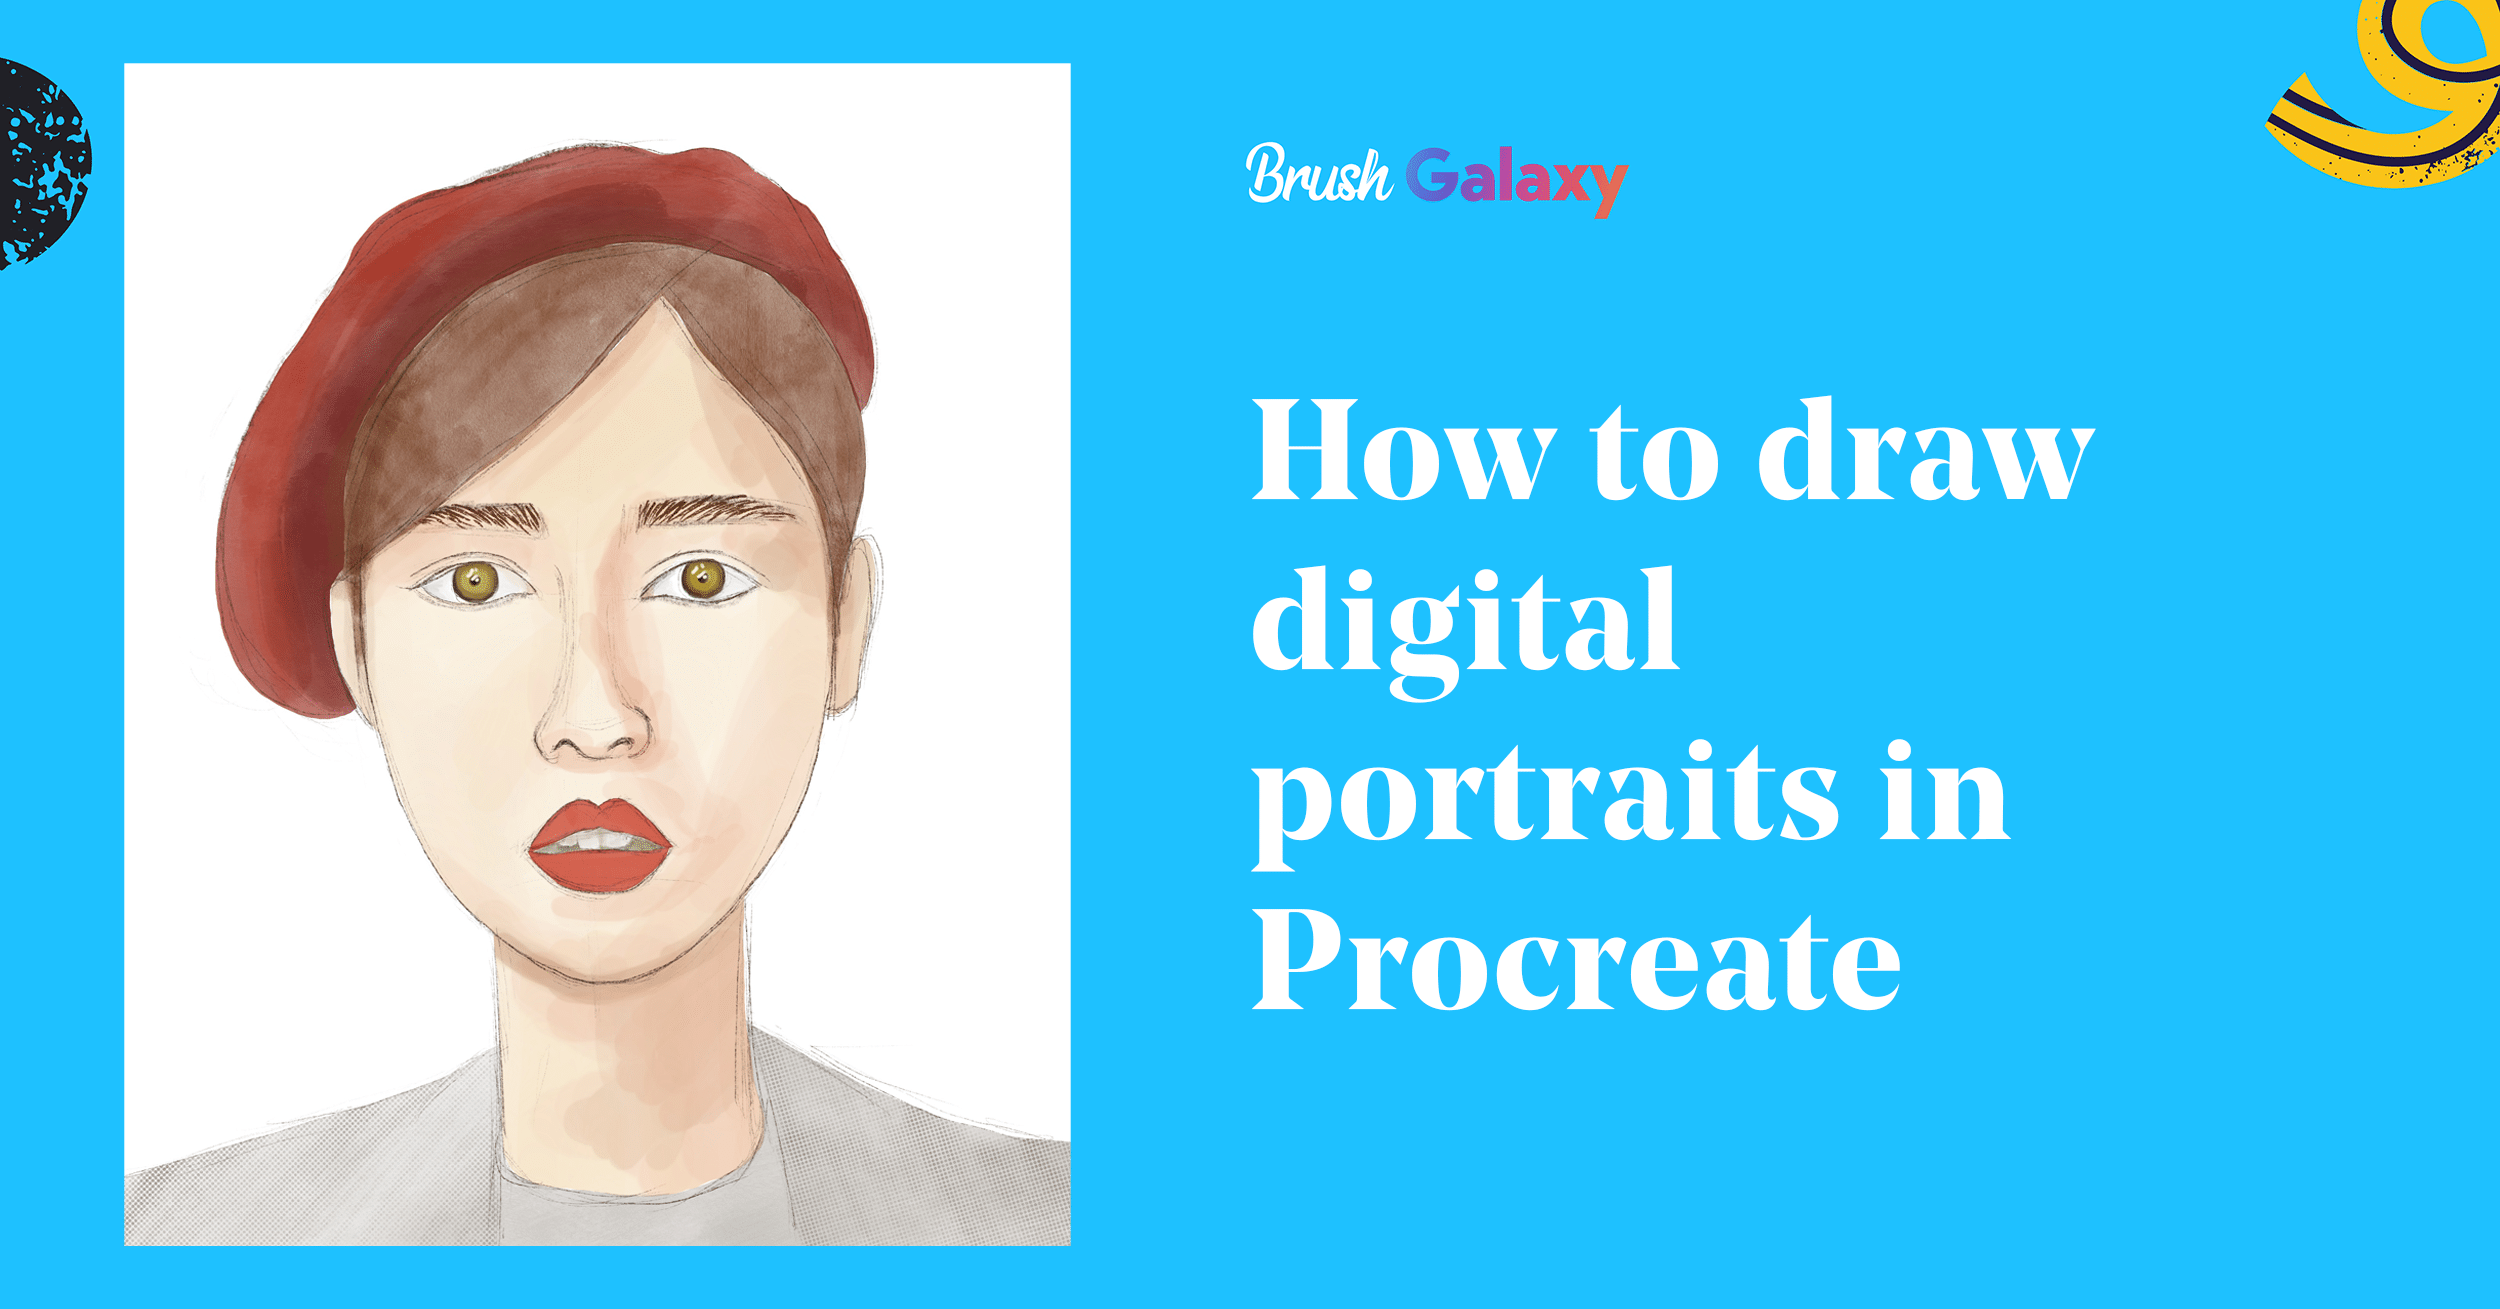 Digital portraits in Procreate